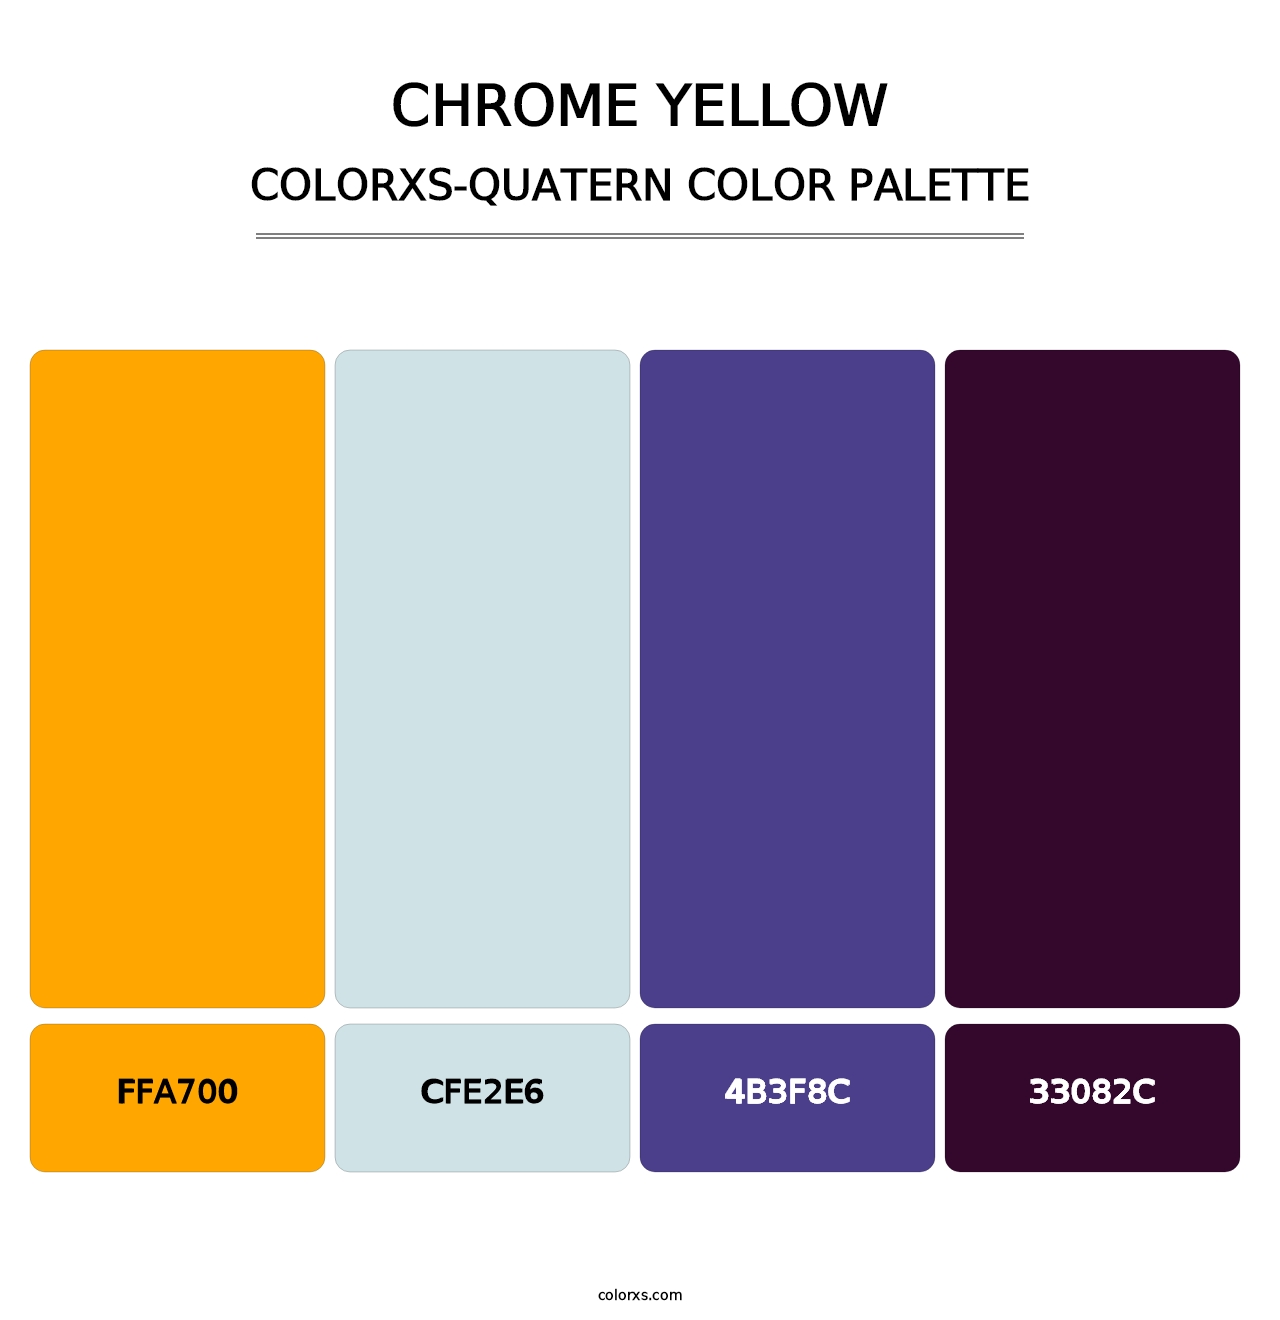 Chrome Yellow - Colorxs Quatern Palette